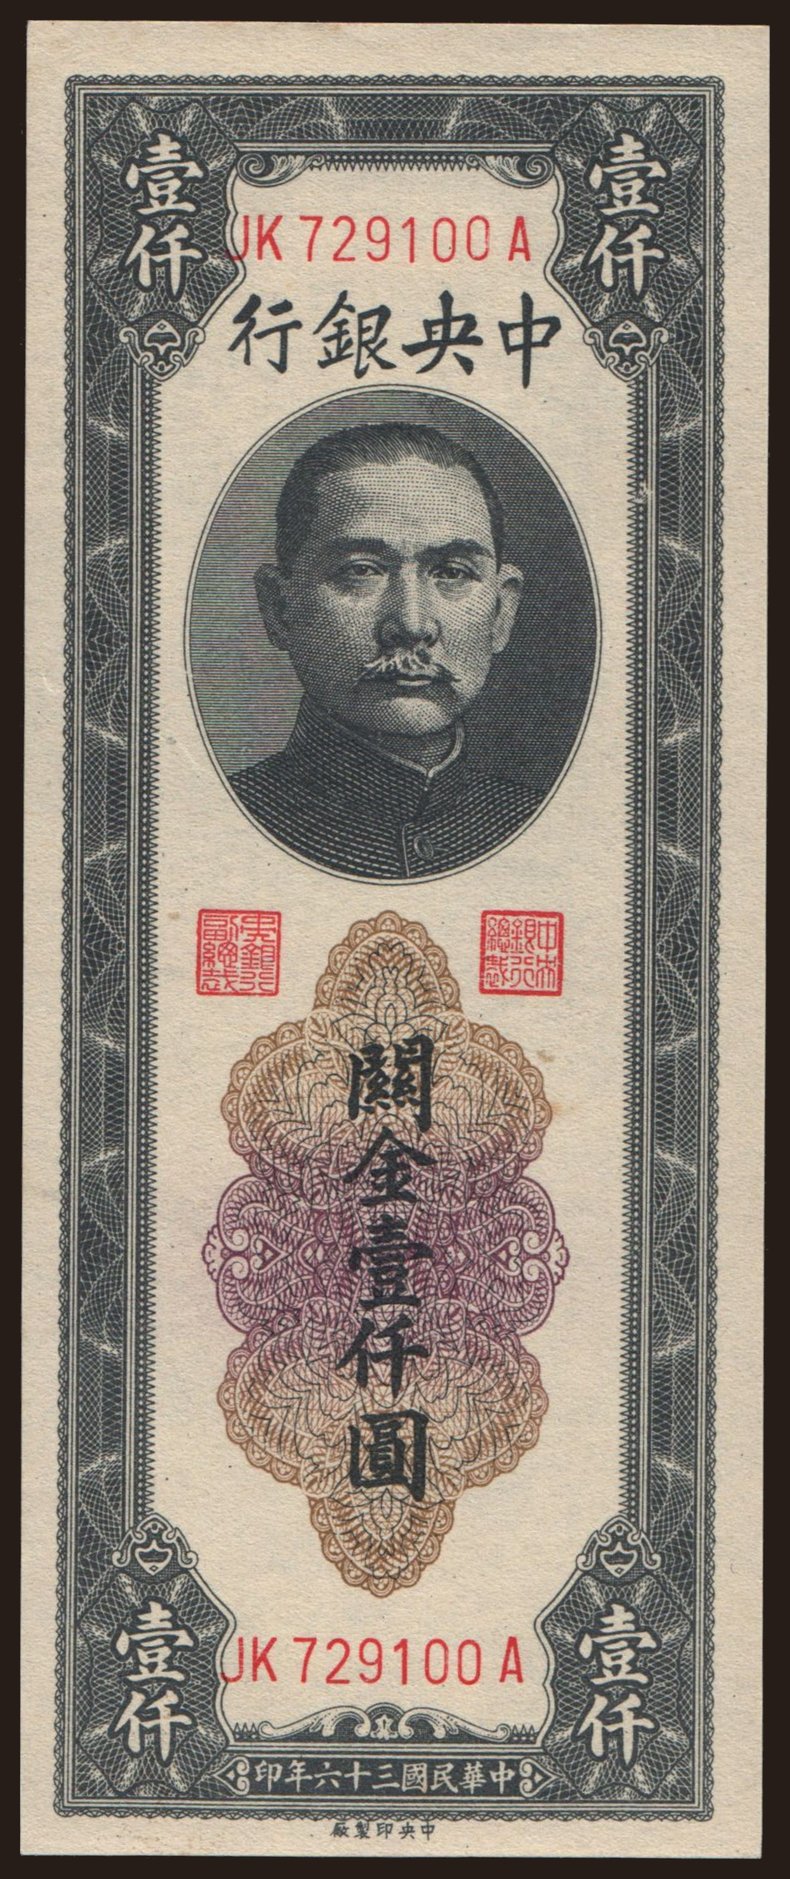 Central Bank of China, 1000 gold units, 1947